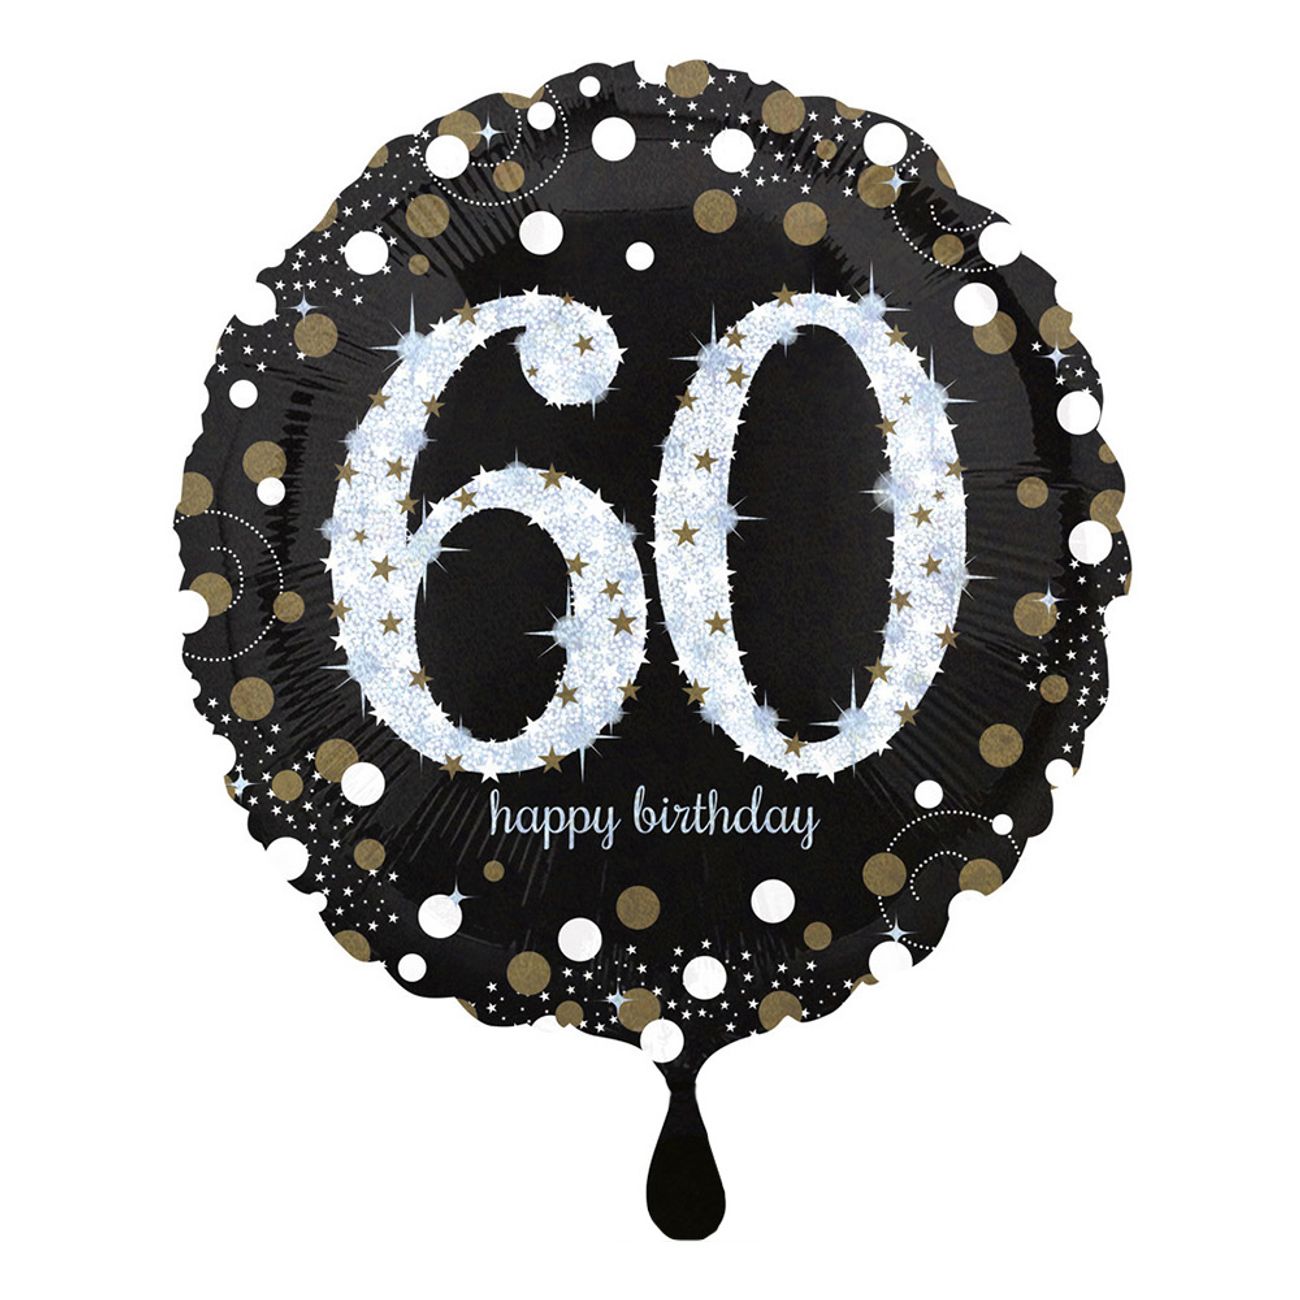 holografisk-gnistrande-birthday-60-folieballong-102526-2